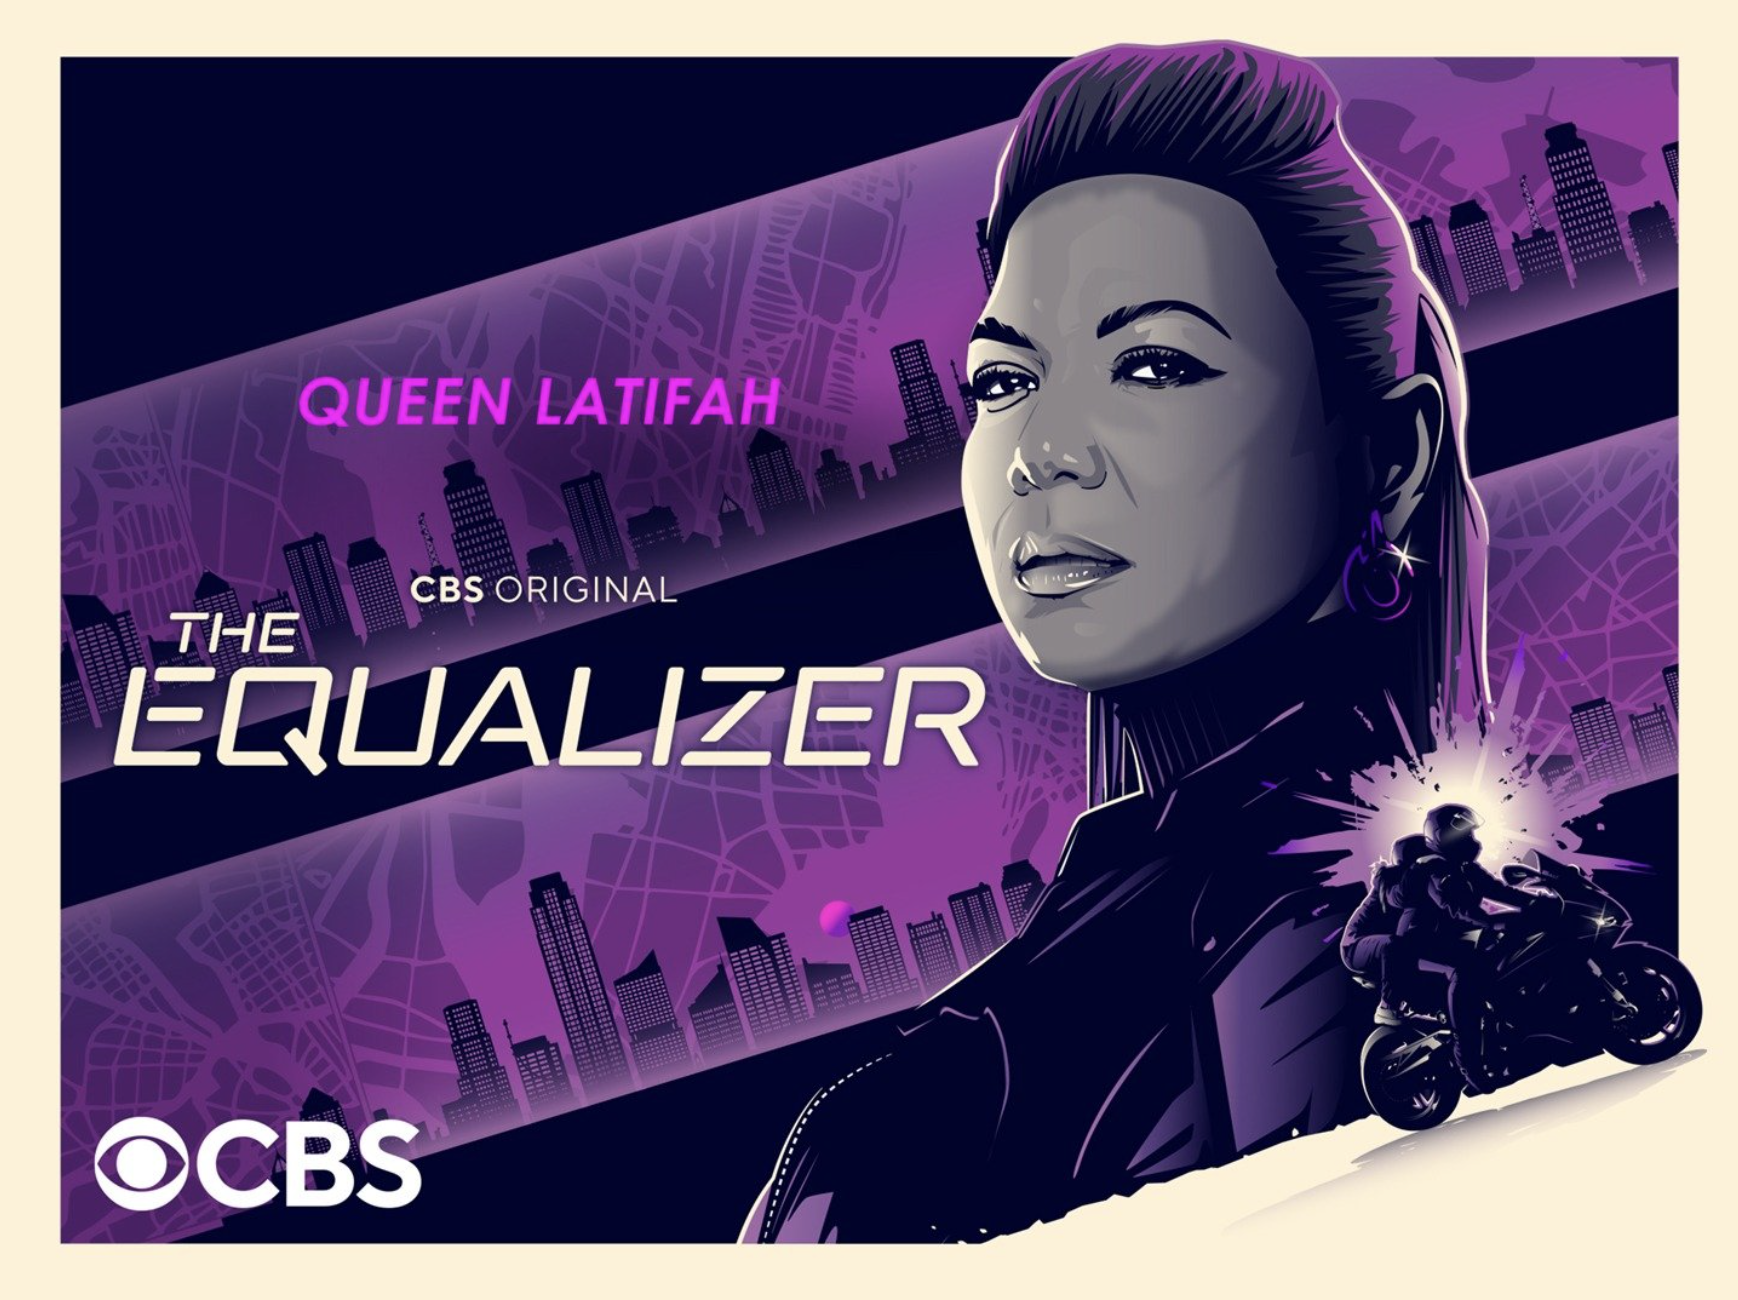 The Equalizer: CBS, Season 4 Airs Feb 18